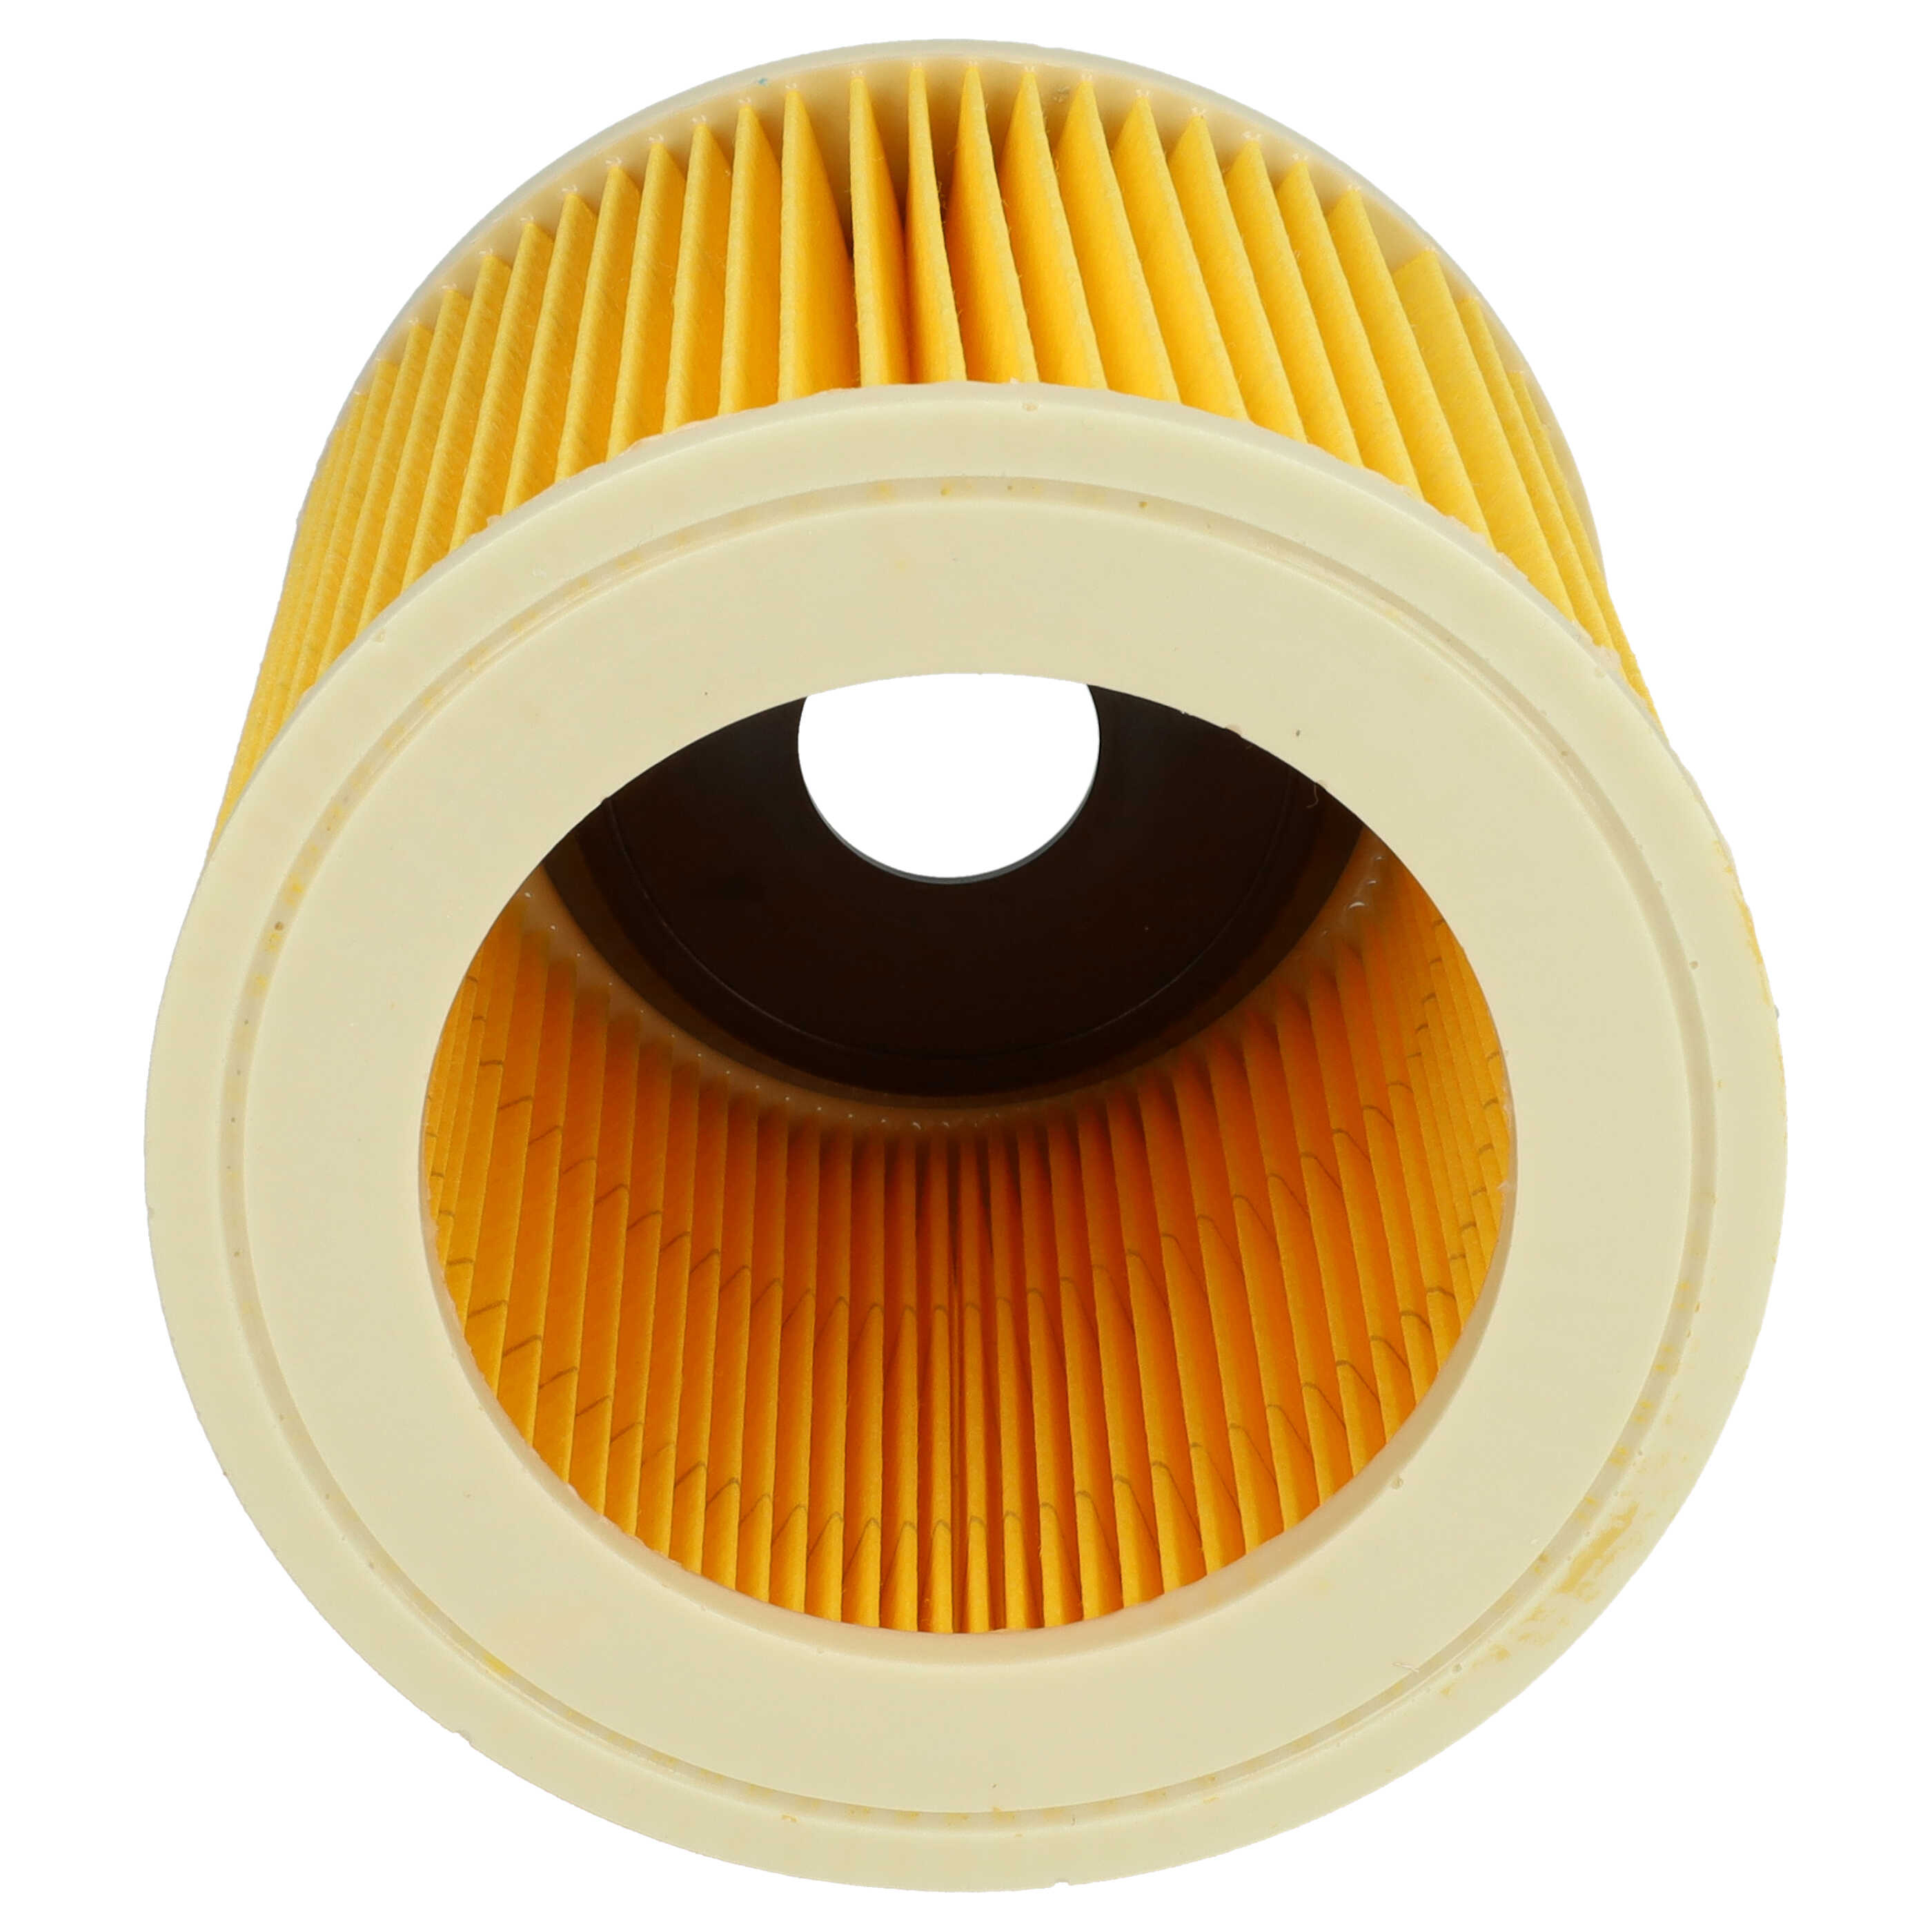 Filtro reemplaza Kärcher 2.863-303.0, 6.414-552.0, 6.414-547.0 para aspiradora - filtro de cartucho, amarillo